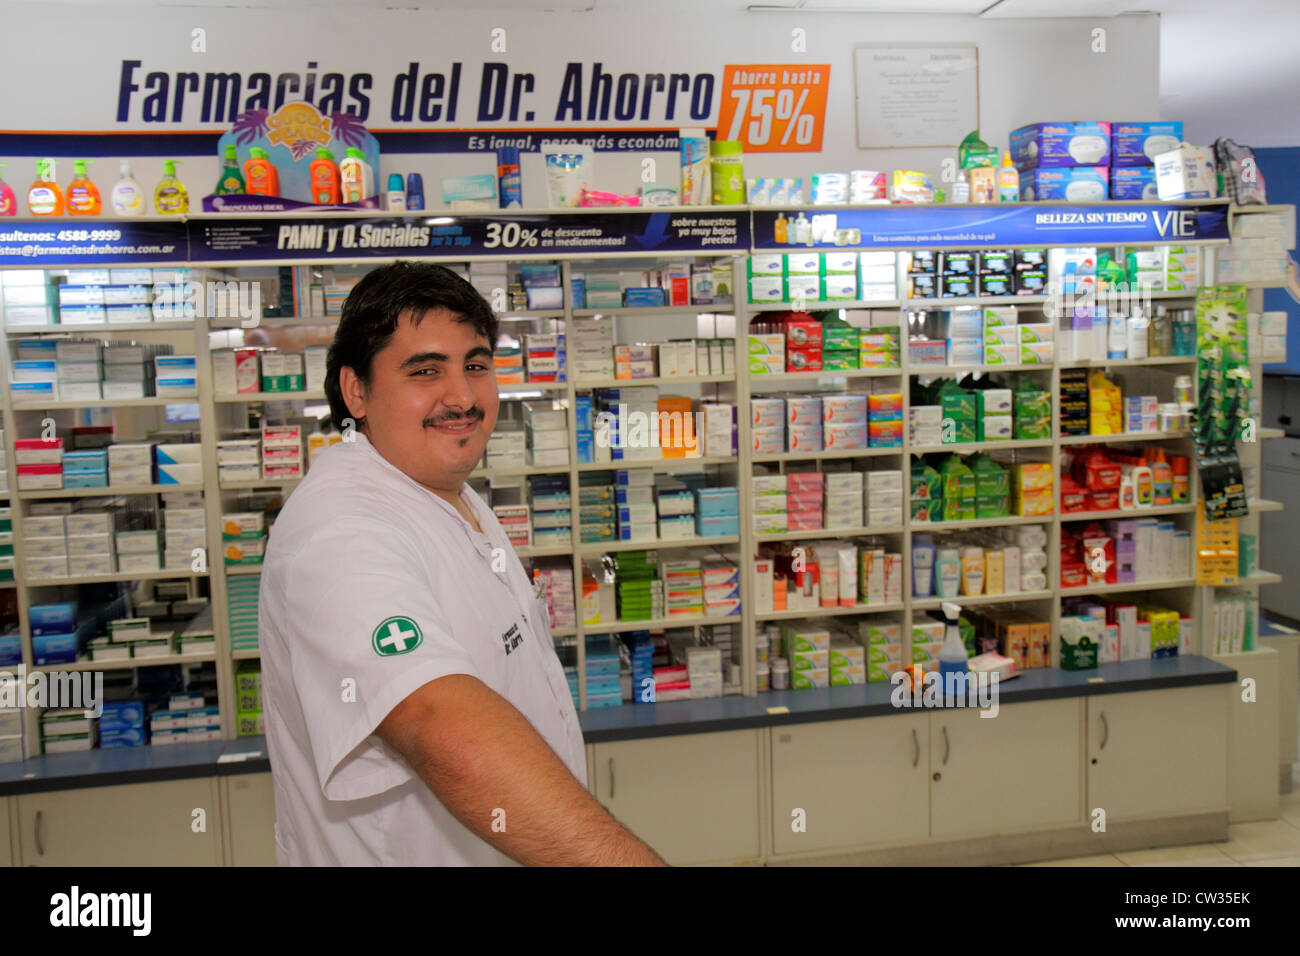 Buenos Aires Argentina,Avenida de Mayo,Farmacia del Dr. Ahorro,discount pharmacy,drug store,medication,medicine,Hispanic man men male adult adults,pha Stock Photo